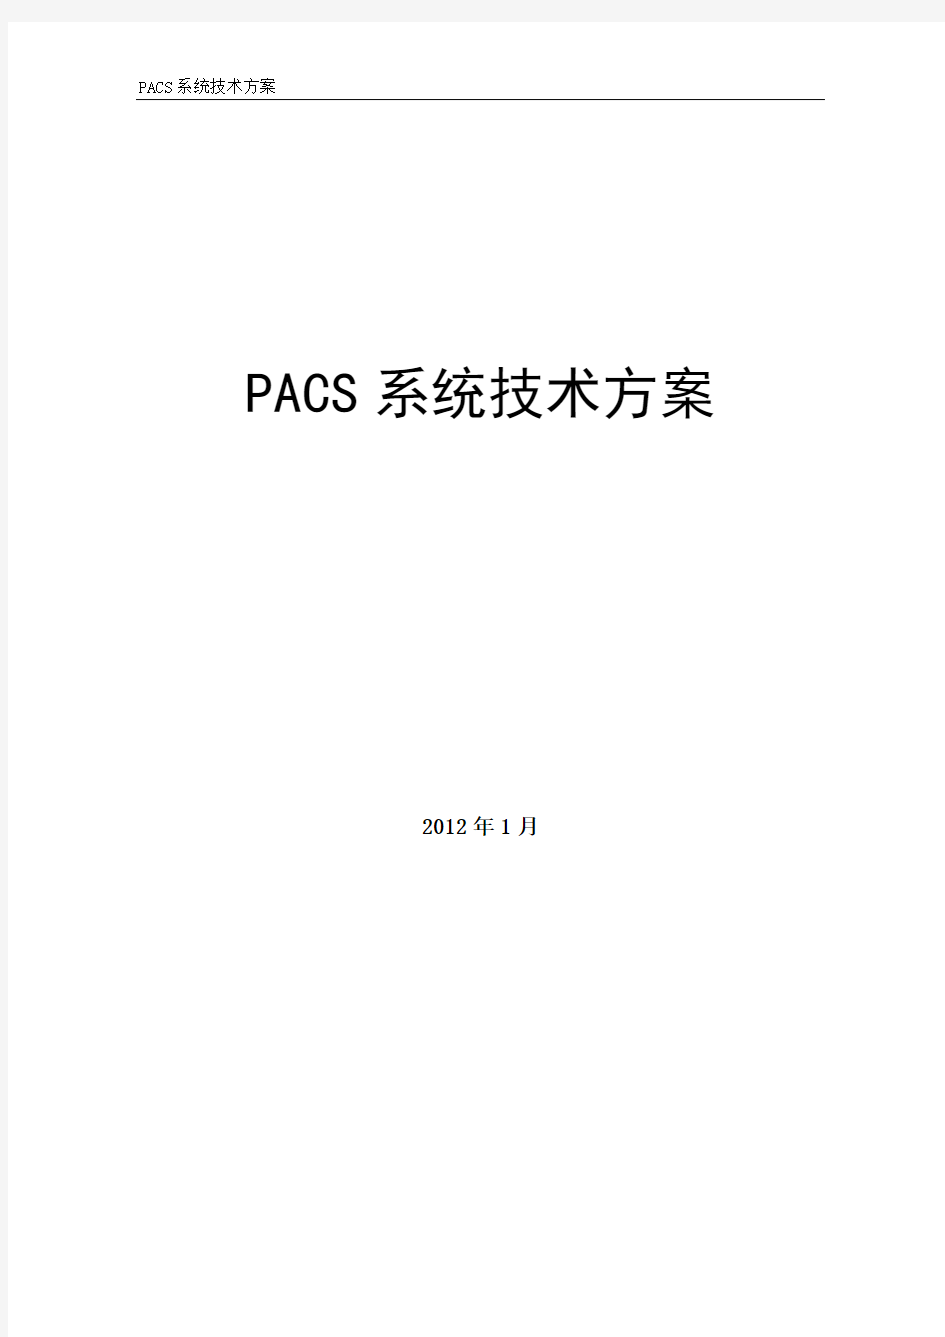 PACS系统建设方案书